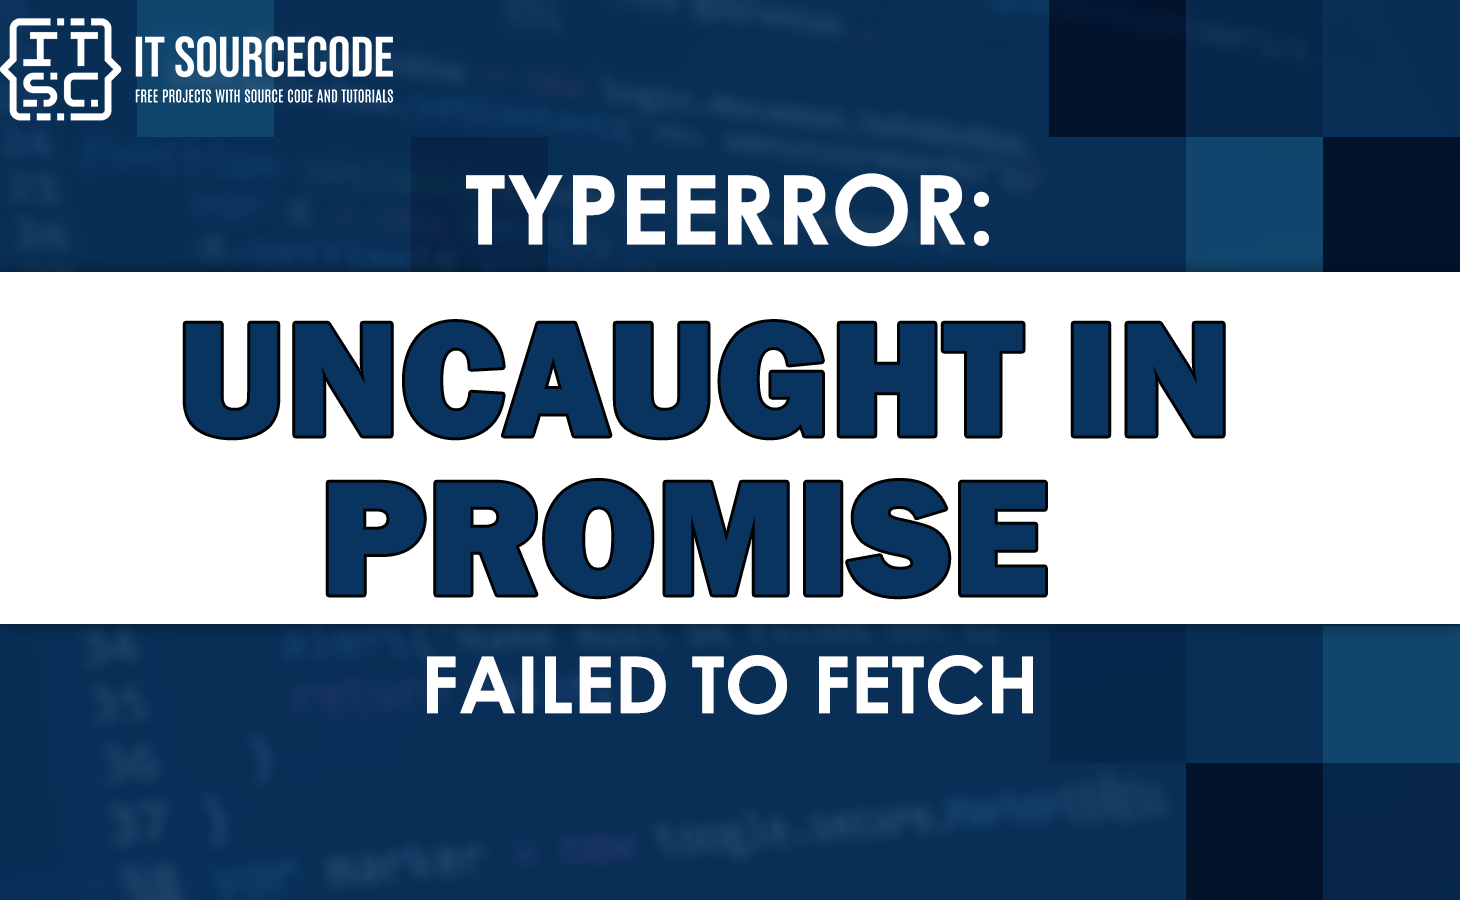 Uncaught in promise typeerror failed to fetch